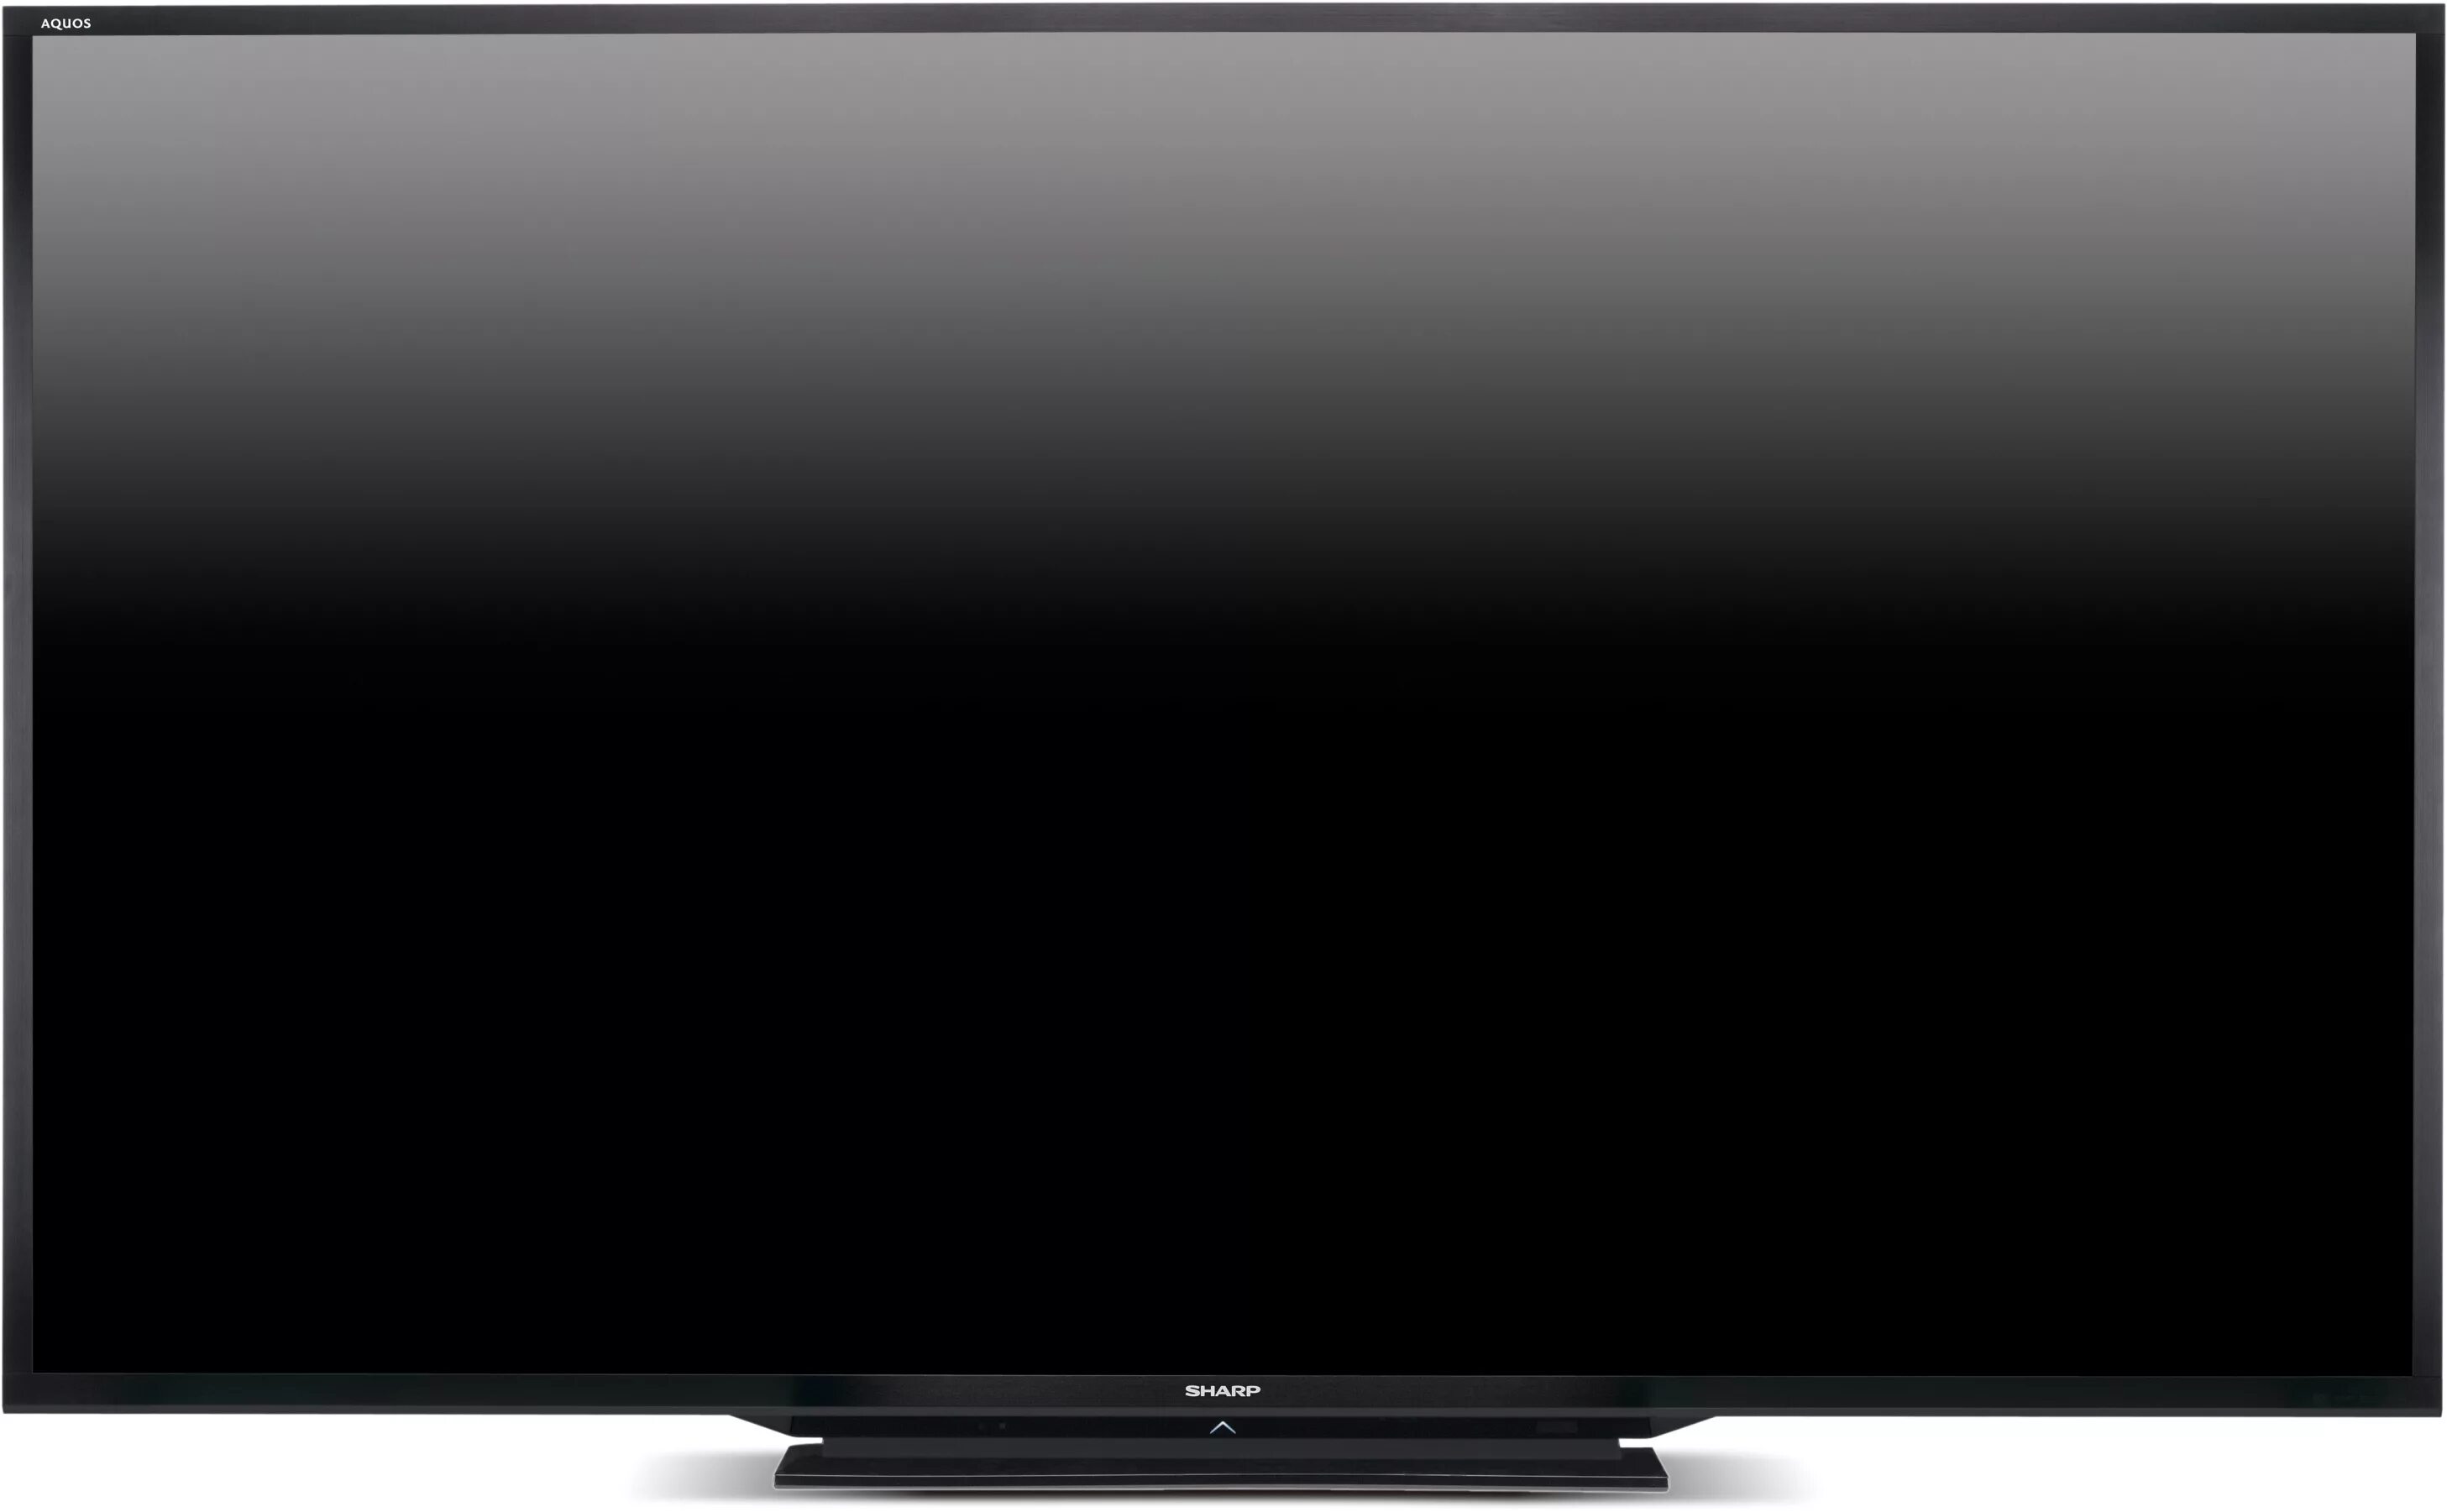 Черный фон телевизора. Aquos LC-90le745u. Плазма телевизор DBL C,JRE. Sharp LC-90le745 90″. Плазменный экран.